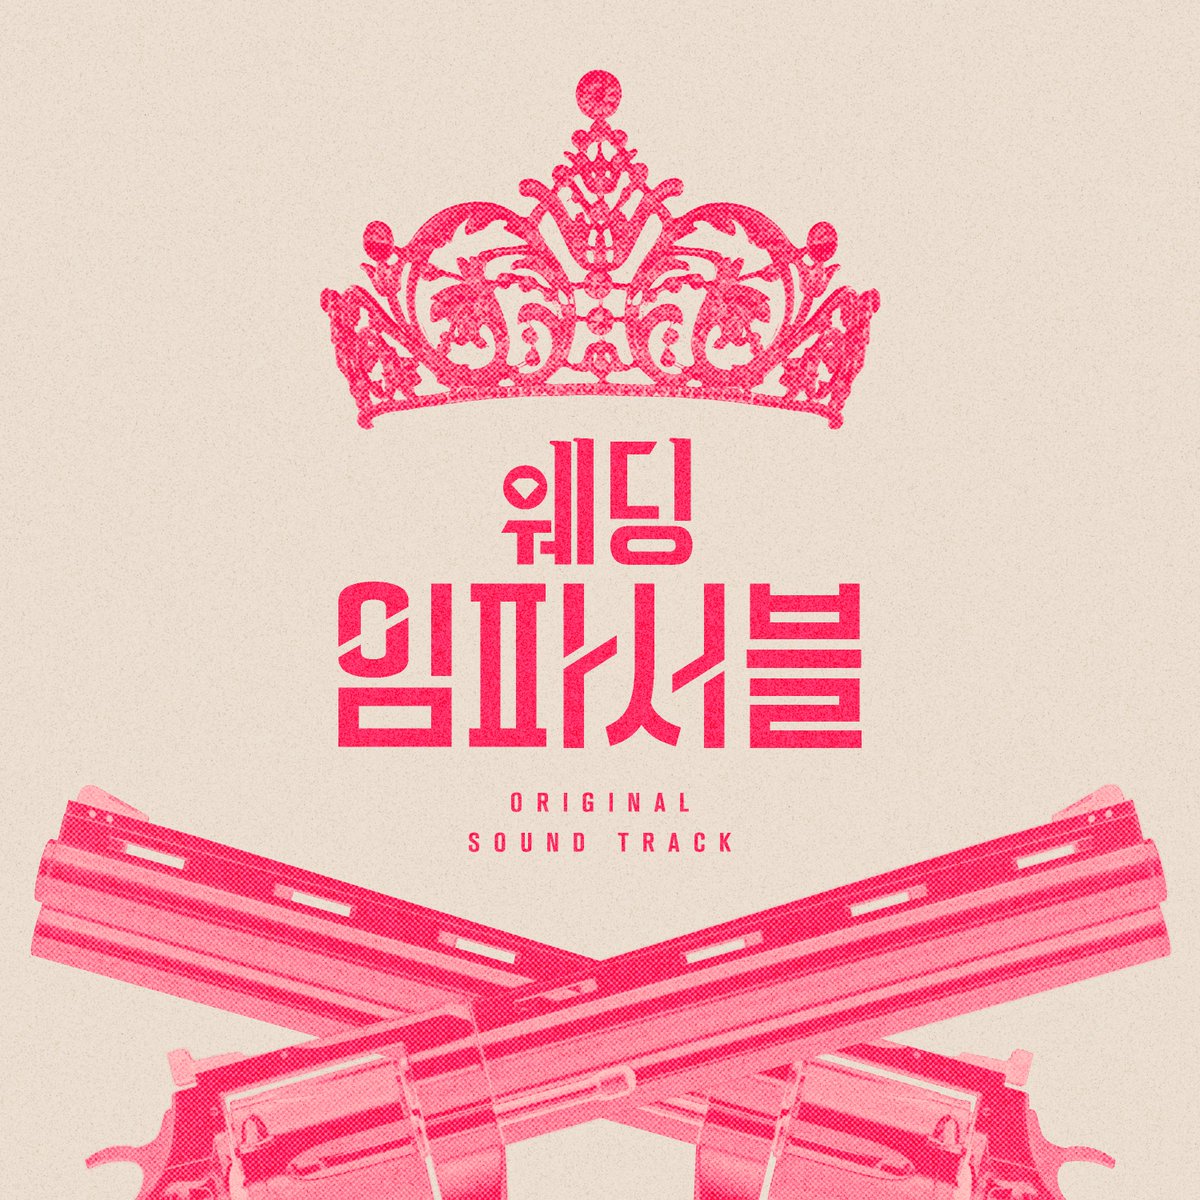 [💿]
tvN 웨딩 임파서블:OST Special [시작된 거야] 
음원이 공개되었습니다🎶
한아 여러분의 많은 사랑 부탁드립니다💜

🍈 Melon
➫ kko.to/Zczd6dKhkC

#한승우 #HANSEUNGWOO
#시작된_거야